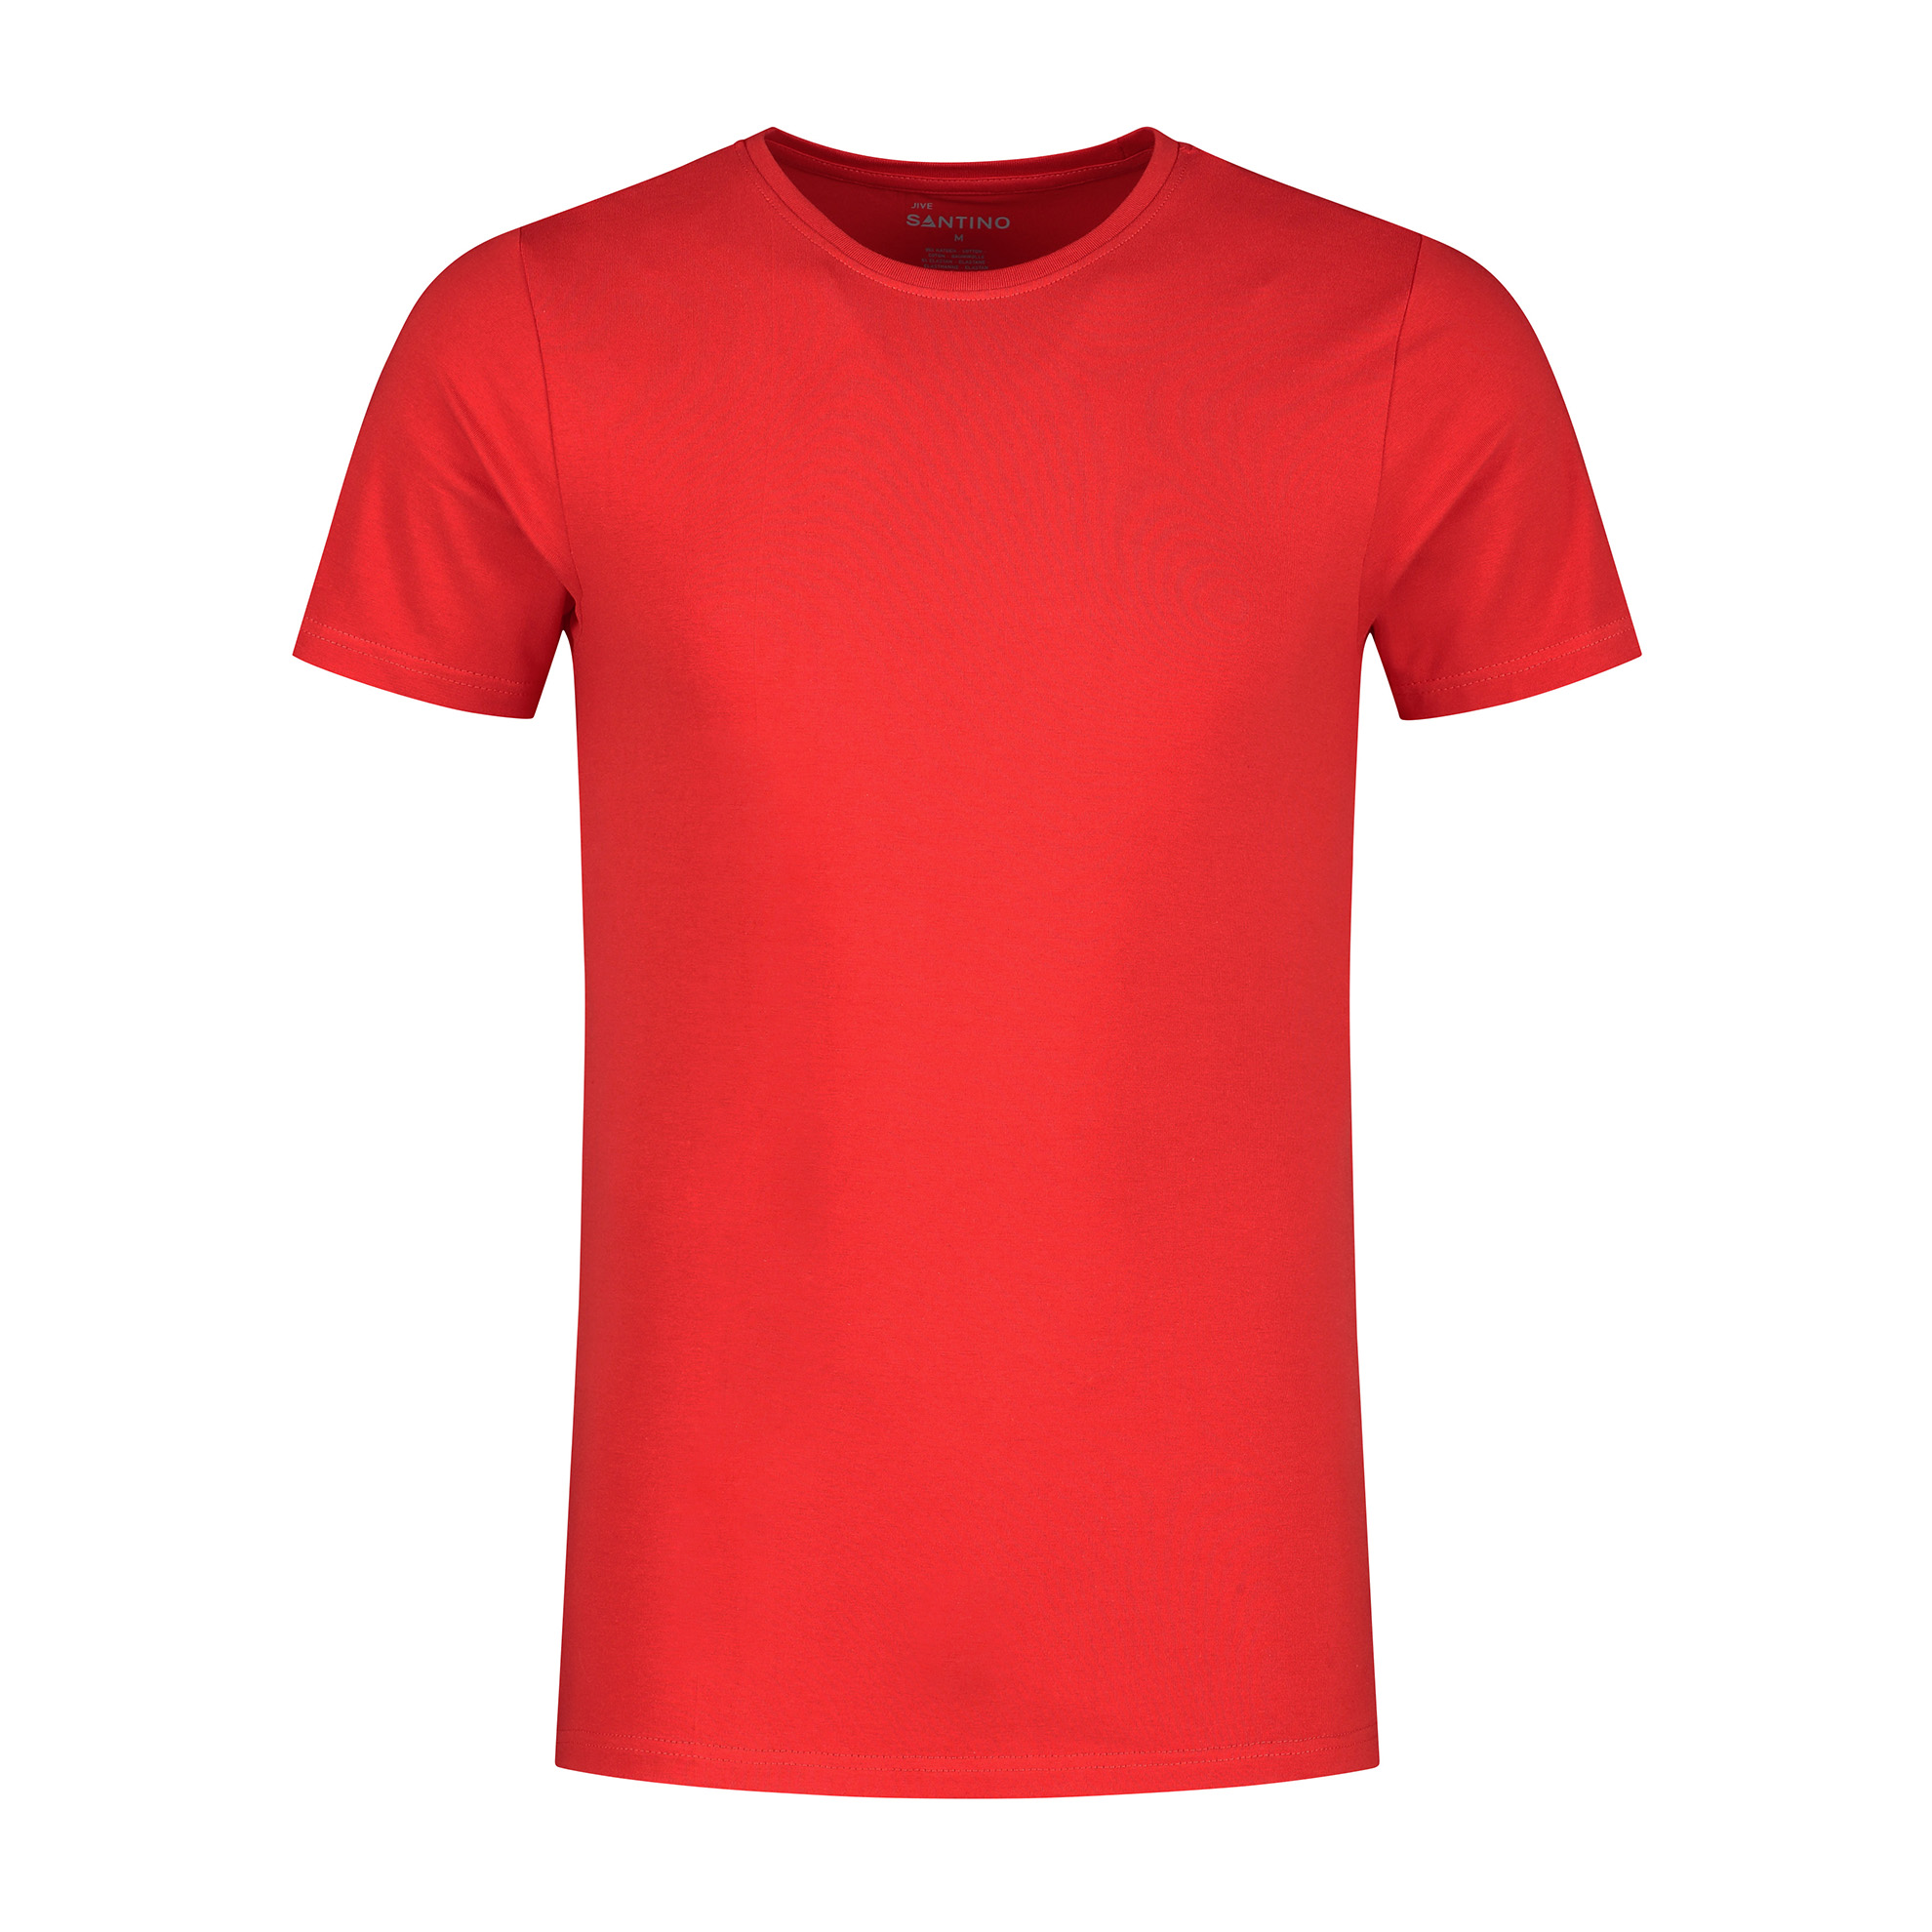 Santino T-Shirt Jive Rot Gr. XL